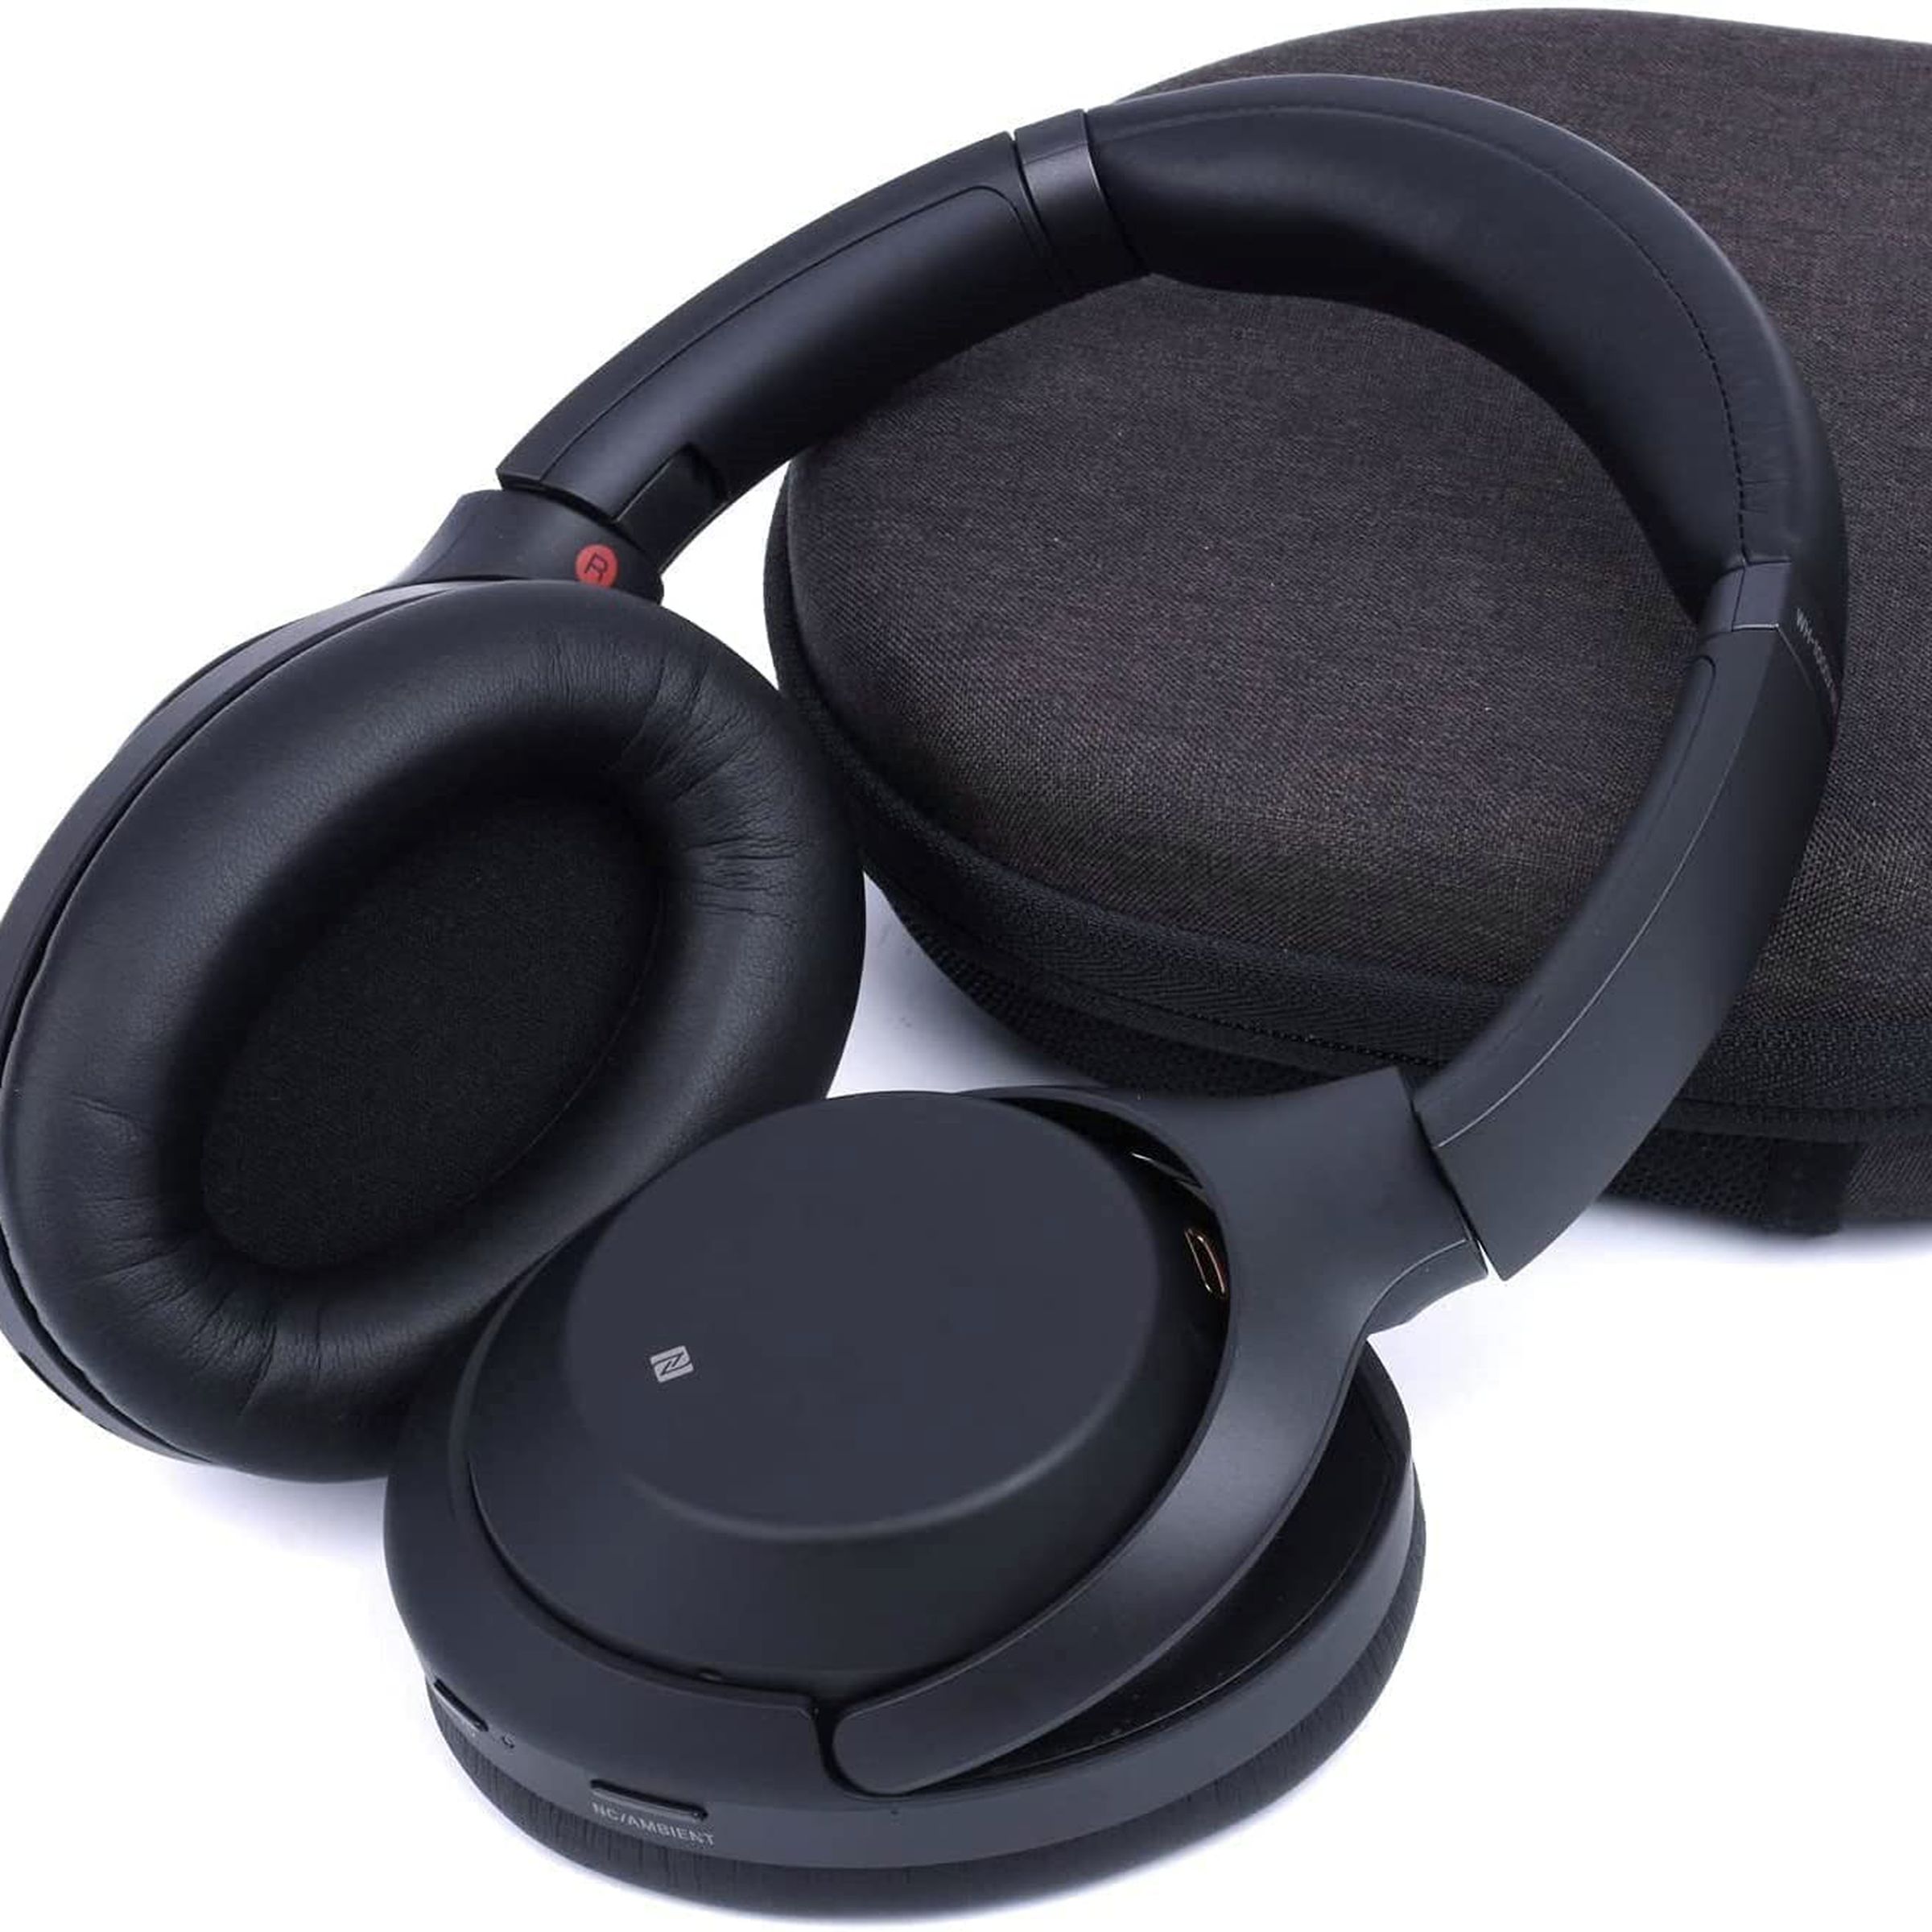 A pair of headphones leaning against a new headphone cushion.